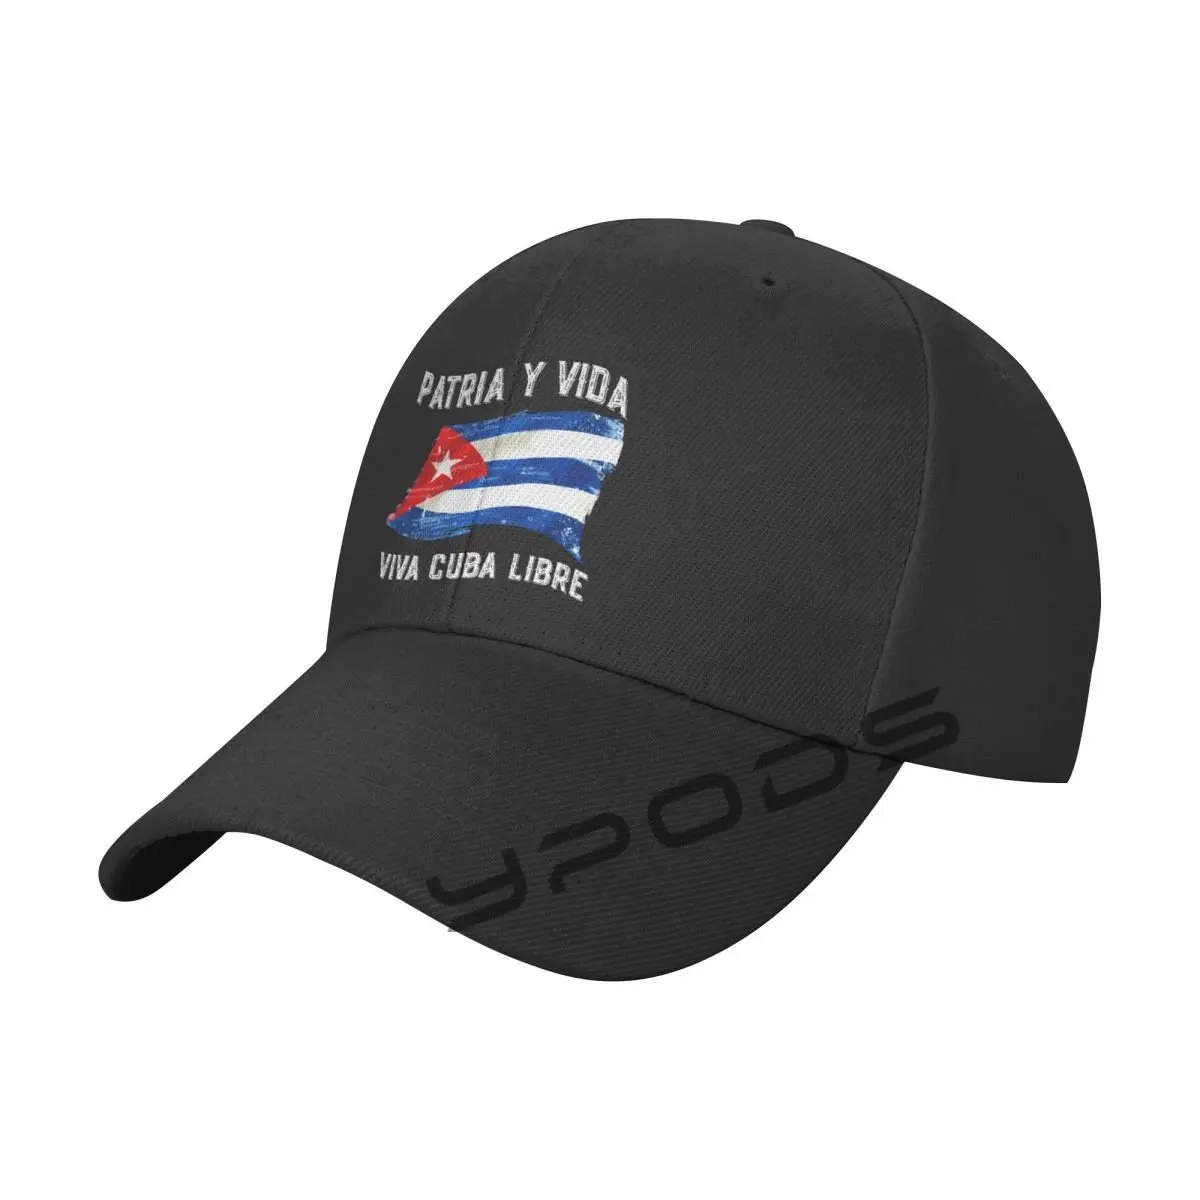 

Patria Y Vida - Viva Cuba Libre Baseball Cap for Men Women Classic Dad Hat Plain Cap Low Profile